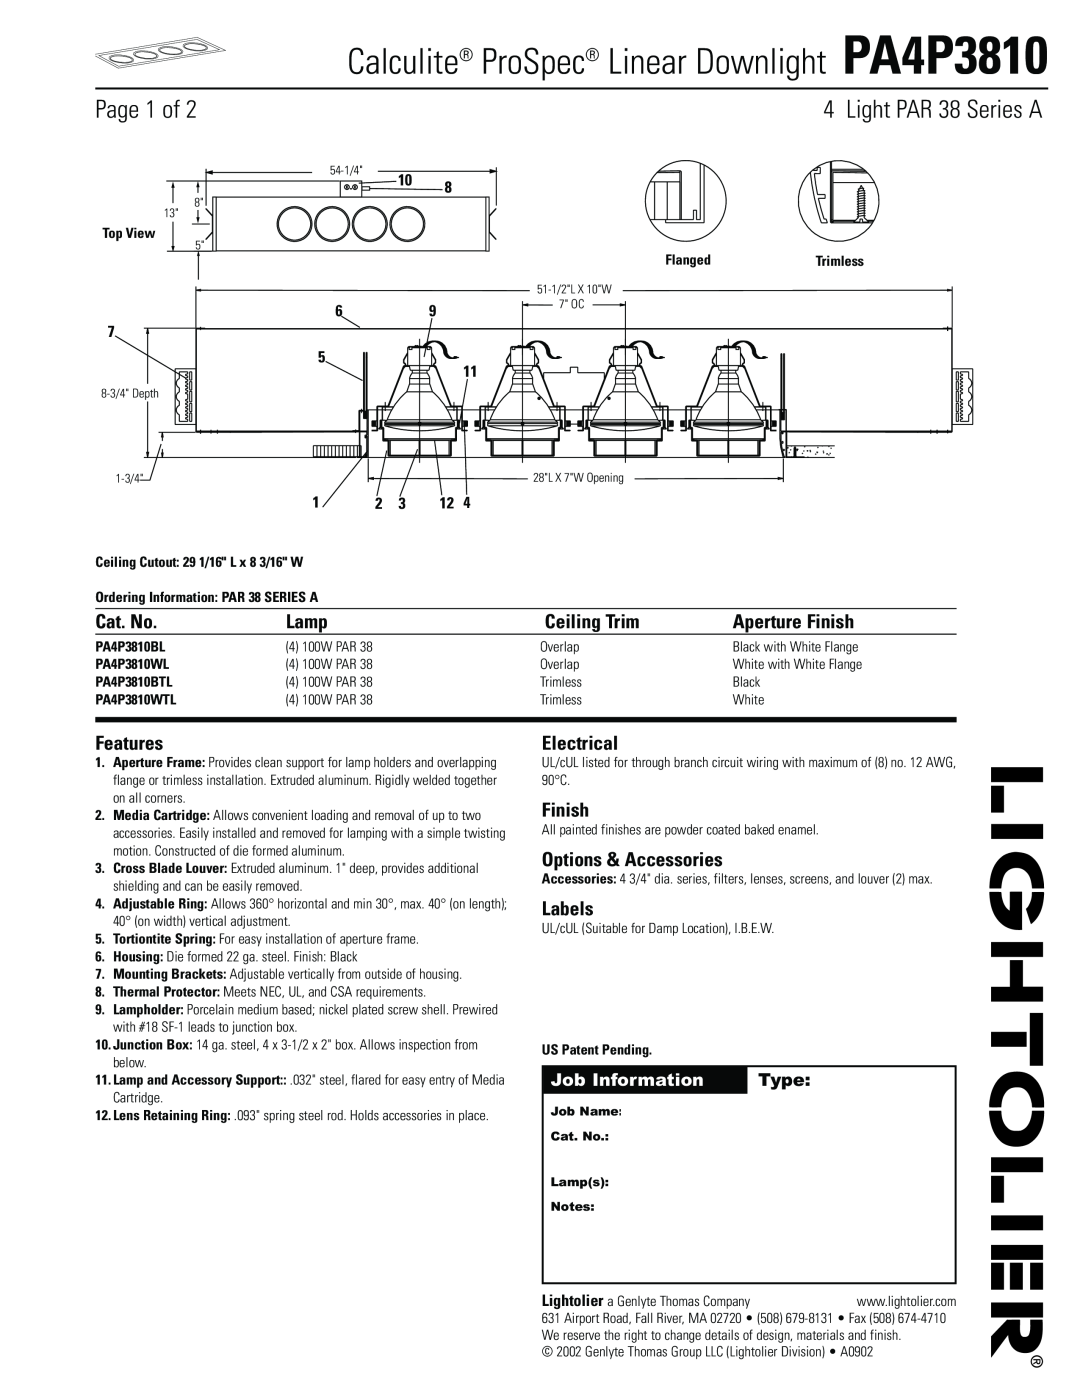 Lightolier manual Calculite ProSpec Linear Downlight PA4P3810, Page 1 of, Light PAR 38 Series A, Cat. No, Lamp, Finish 